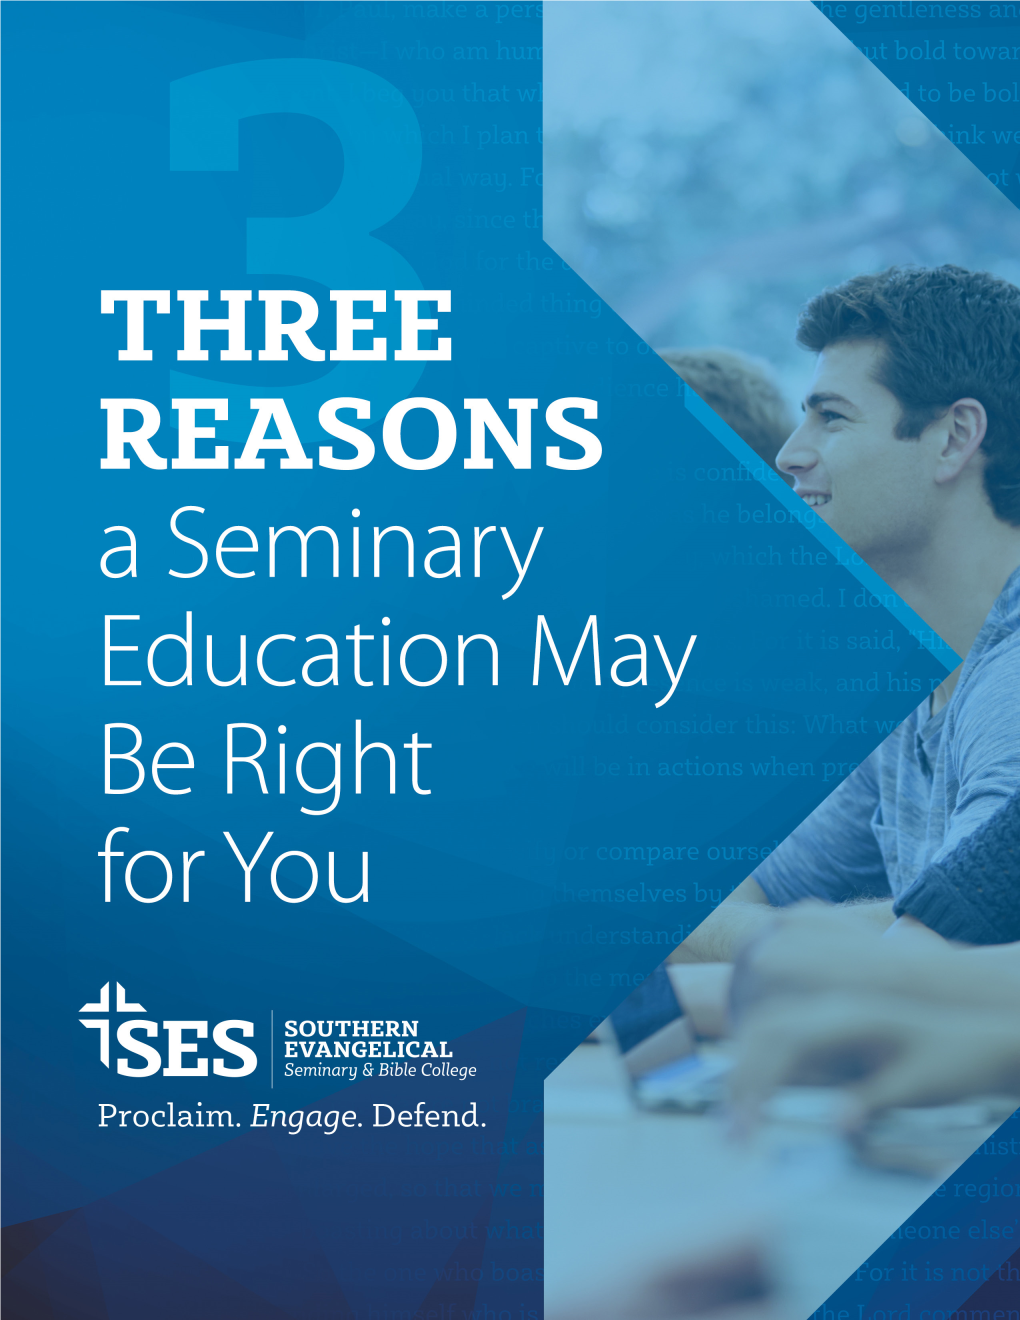 THREE REASONS a Seminary Education May Be Right for You